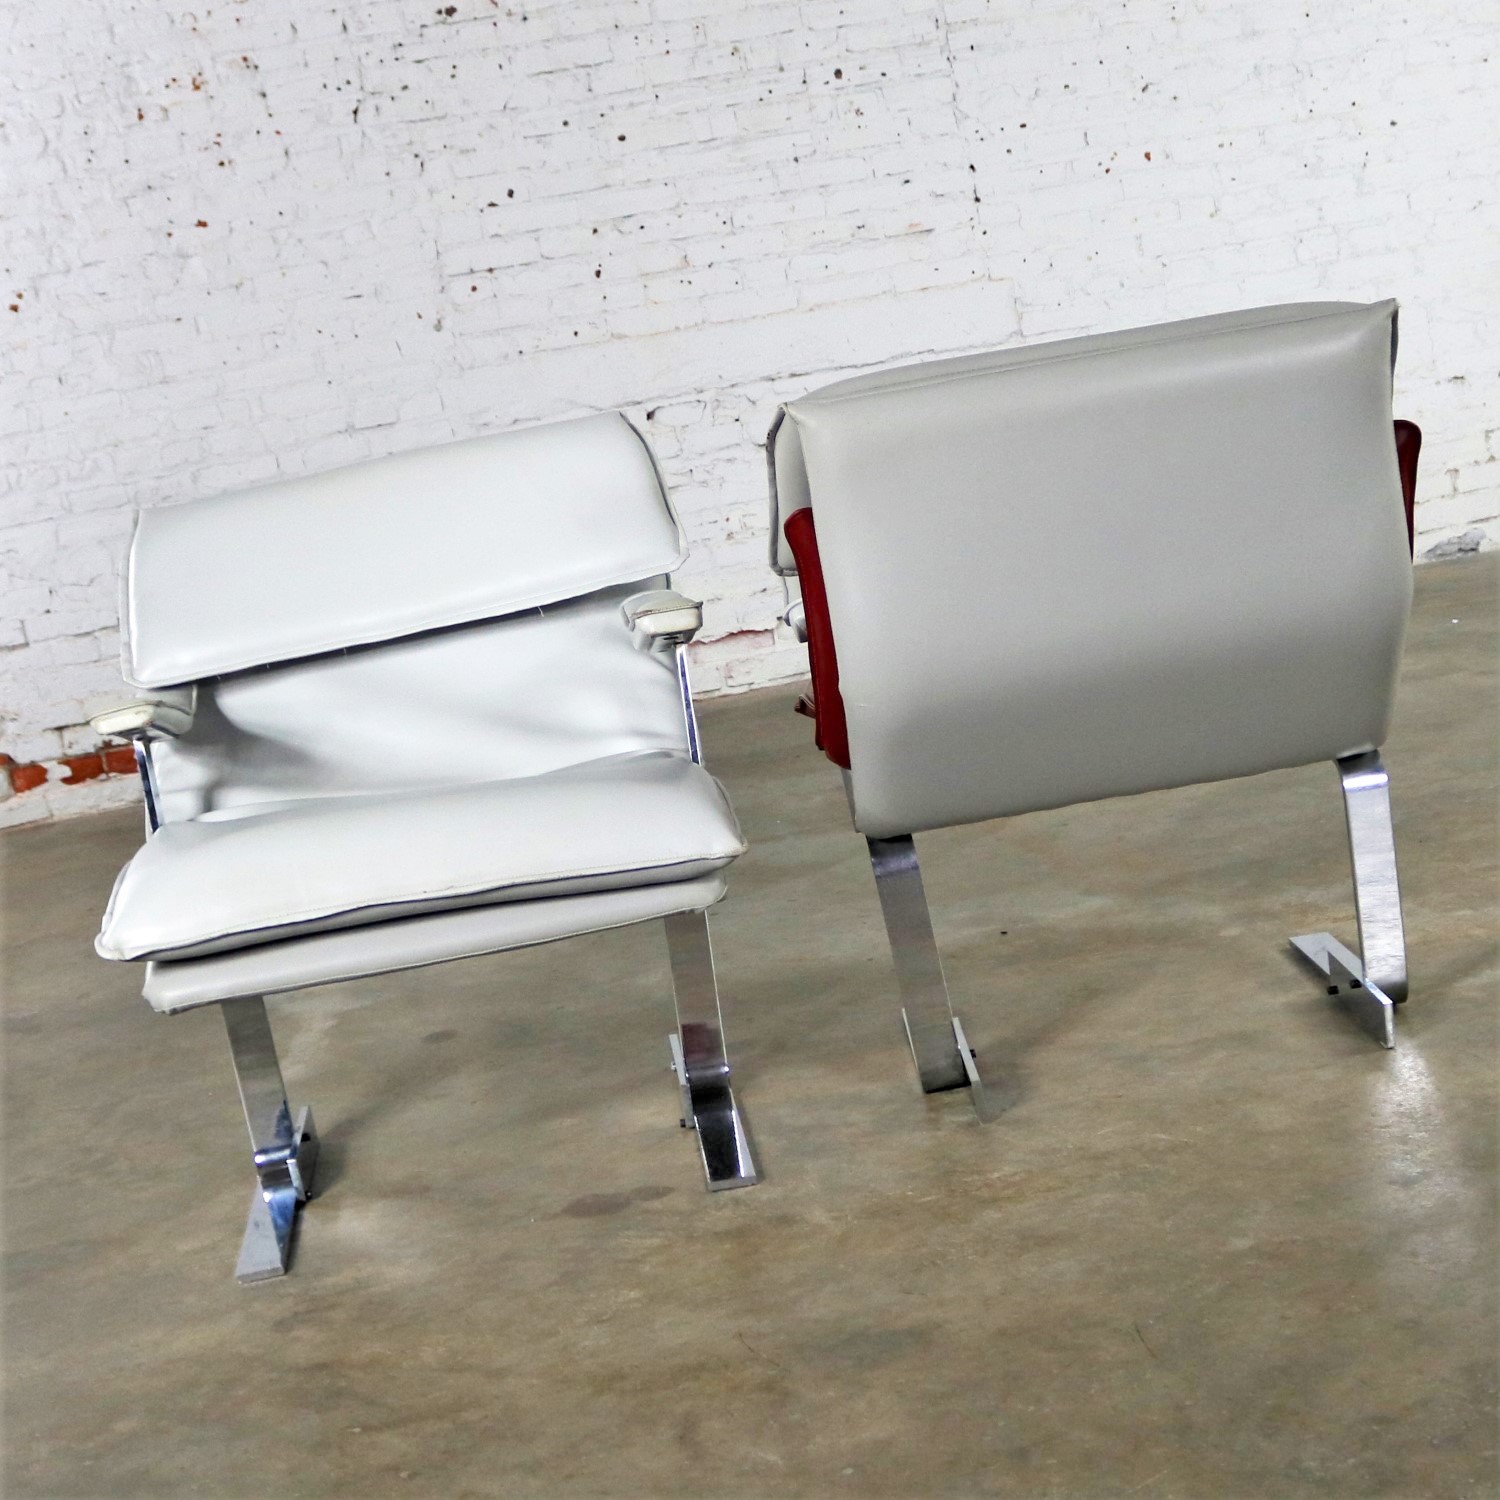 G. Maletti Lounge Chairs in the Style of Onda by Giovanni Offredi for Saporiti Italia